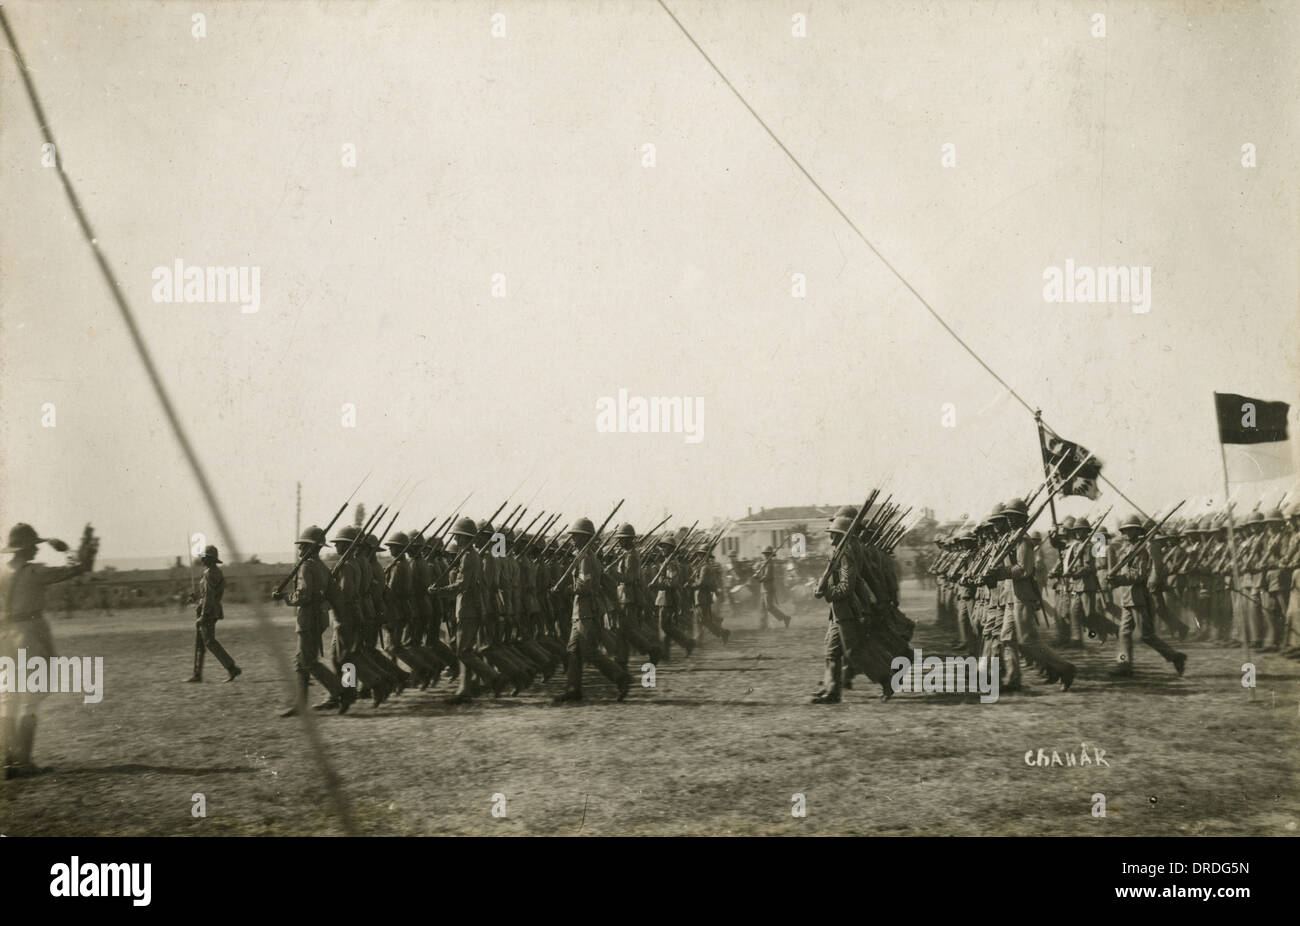 Allied Troops parading - Chanak, Turkey Stock Photo